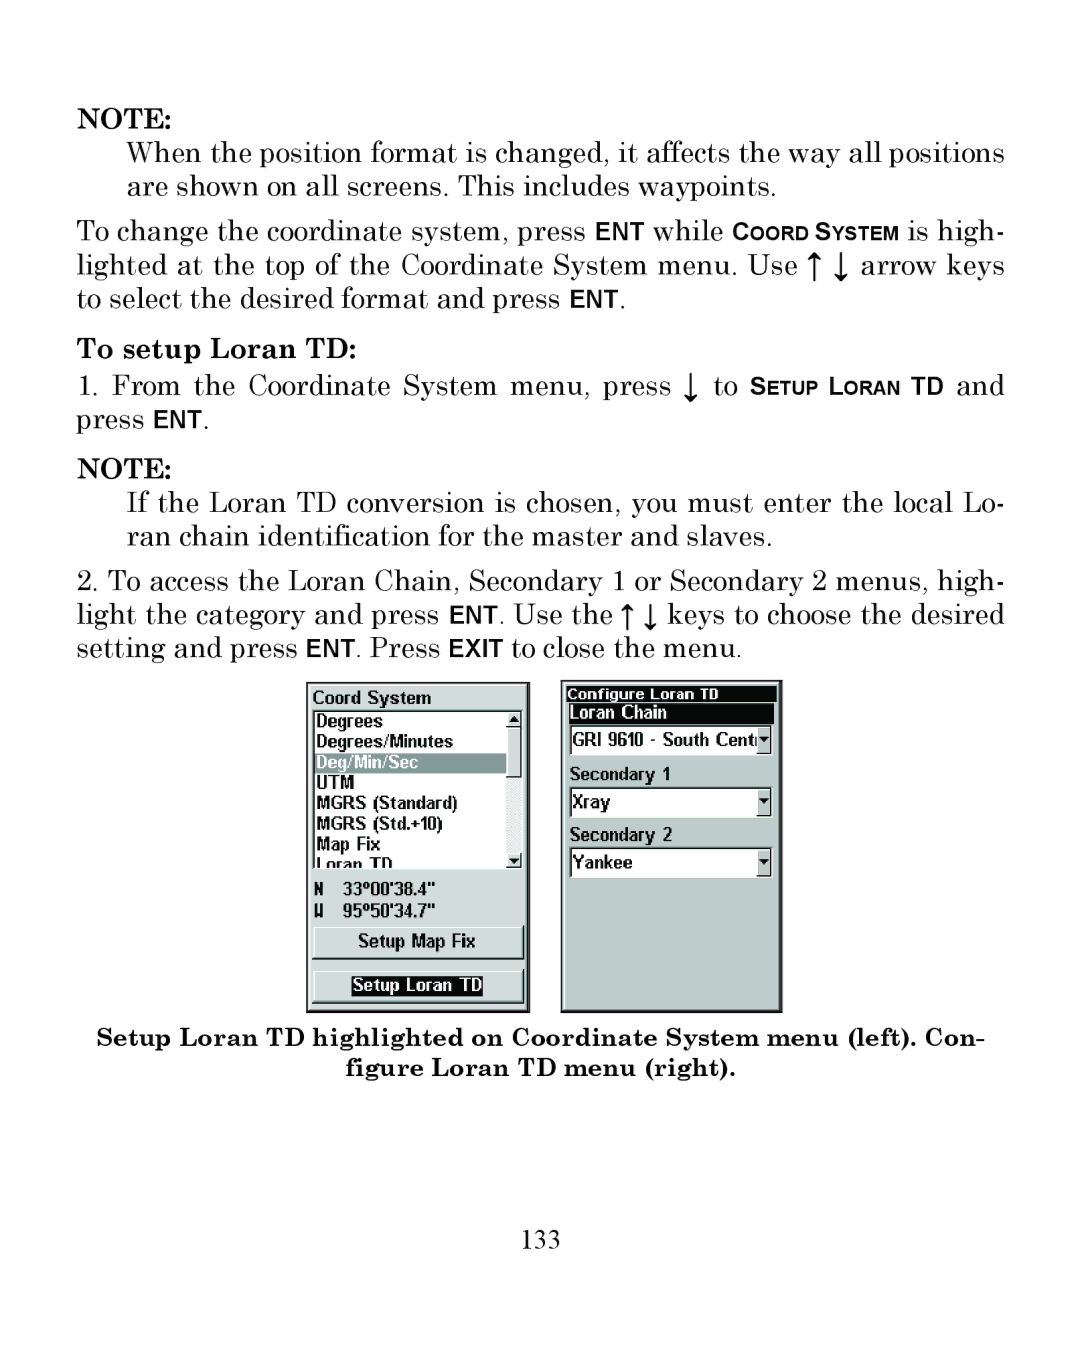 Eagle Electronics 350 S/MAP manual To setup Loran TD, 133 